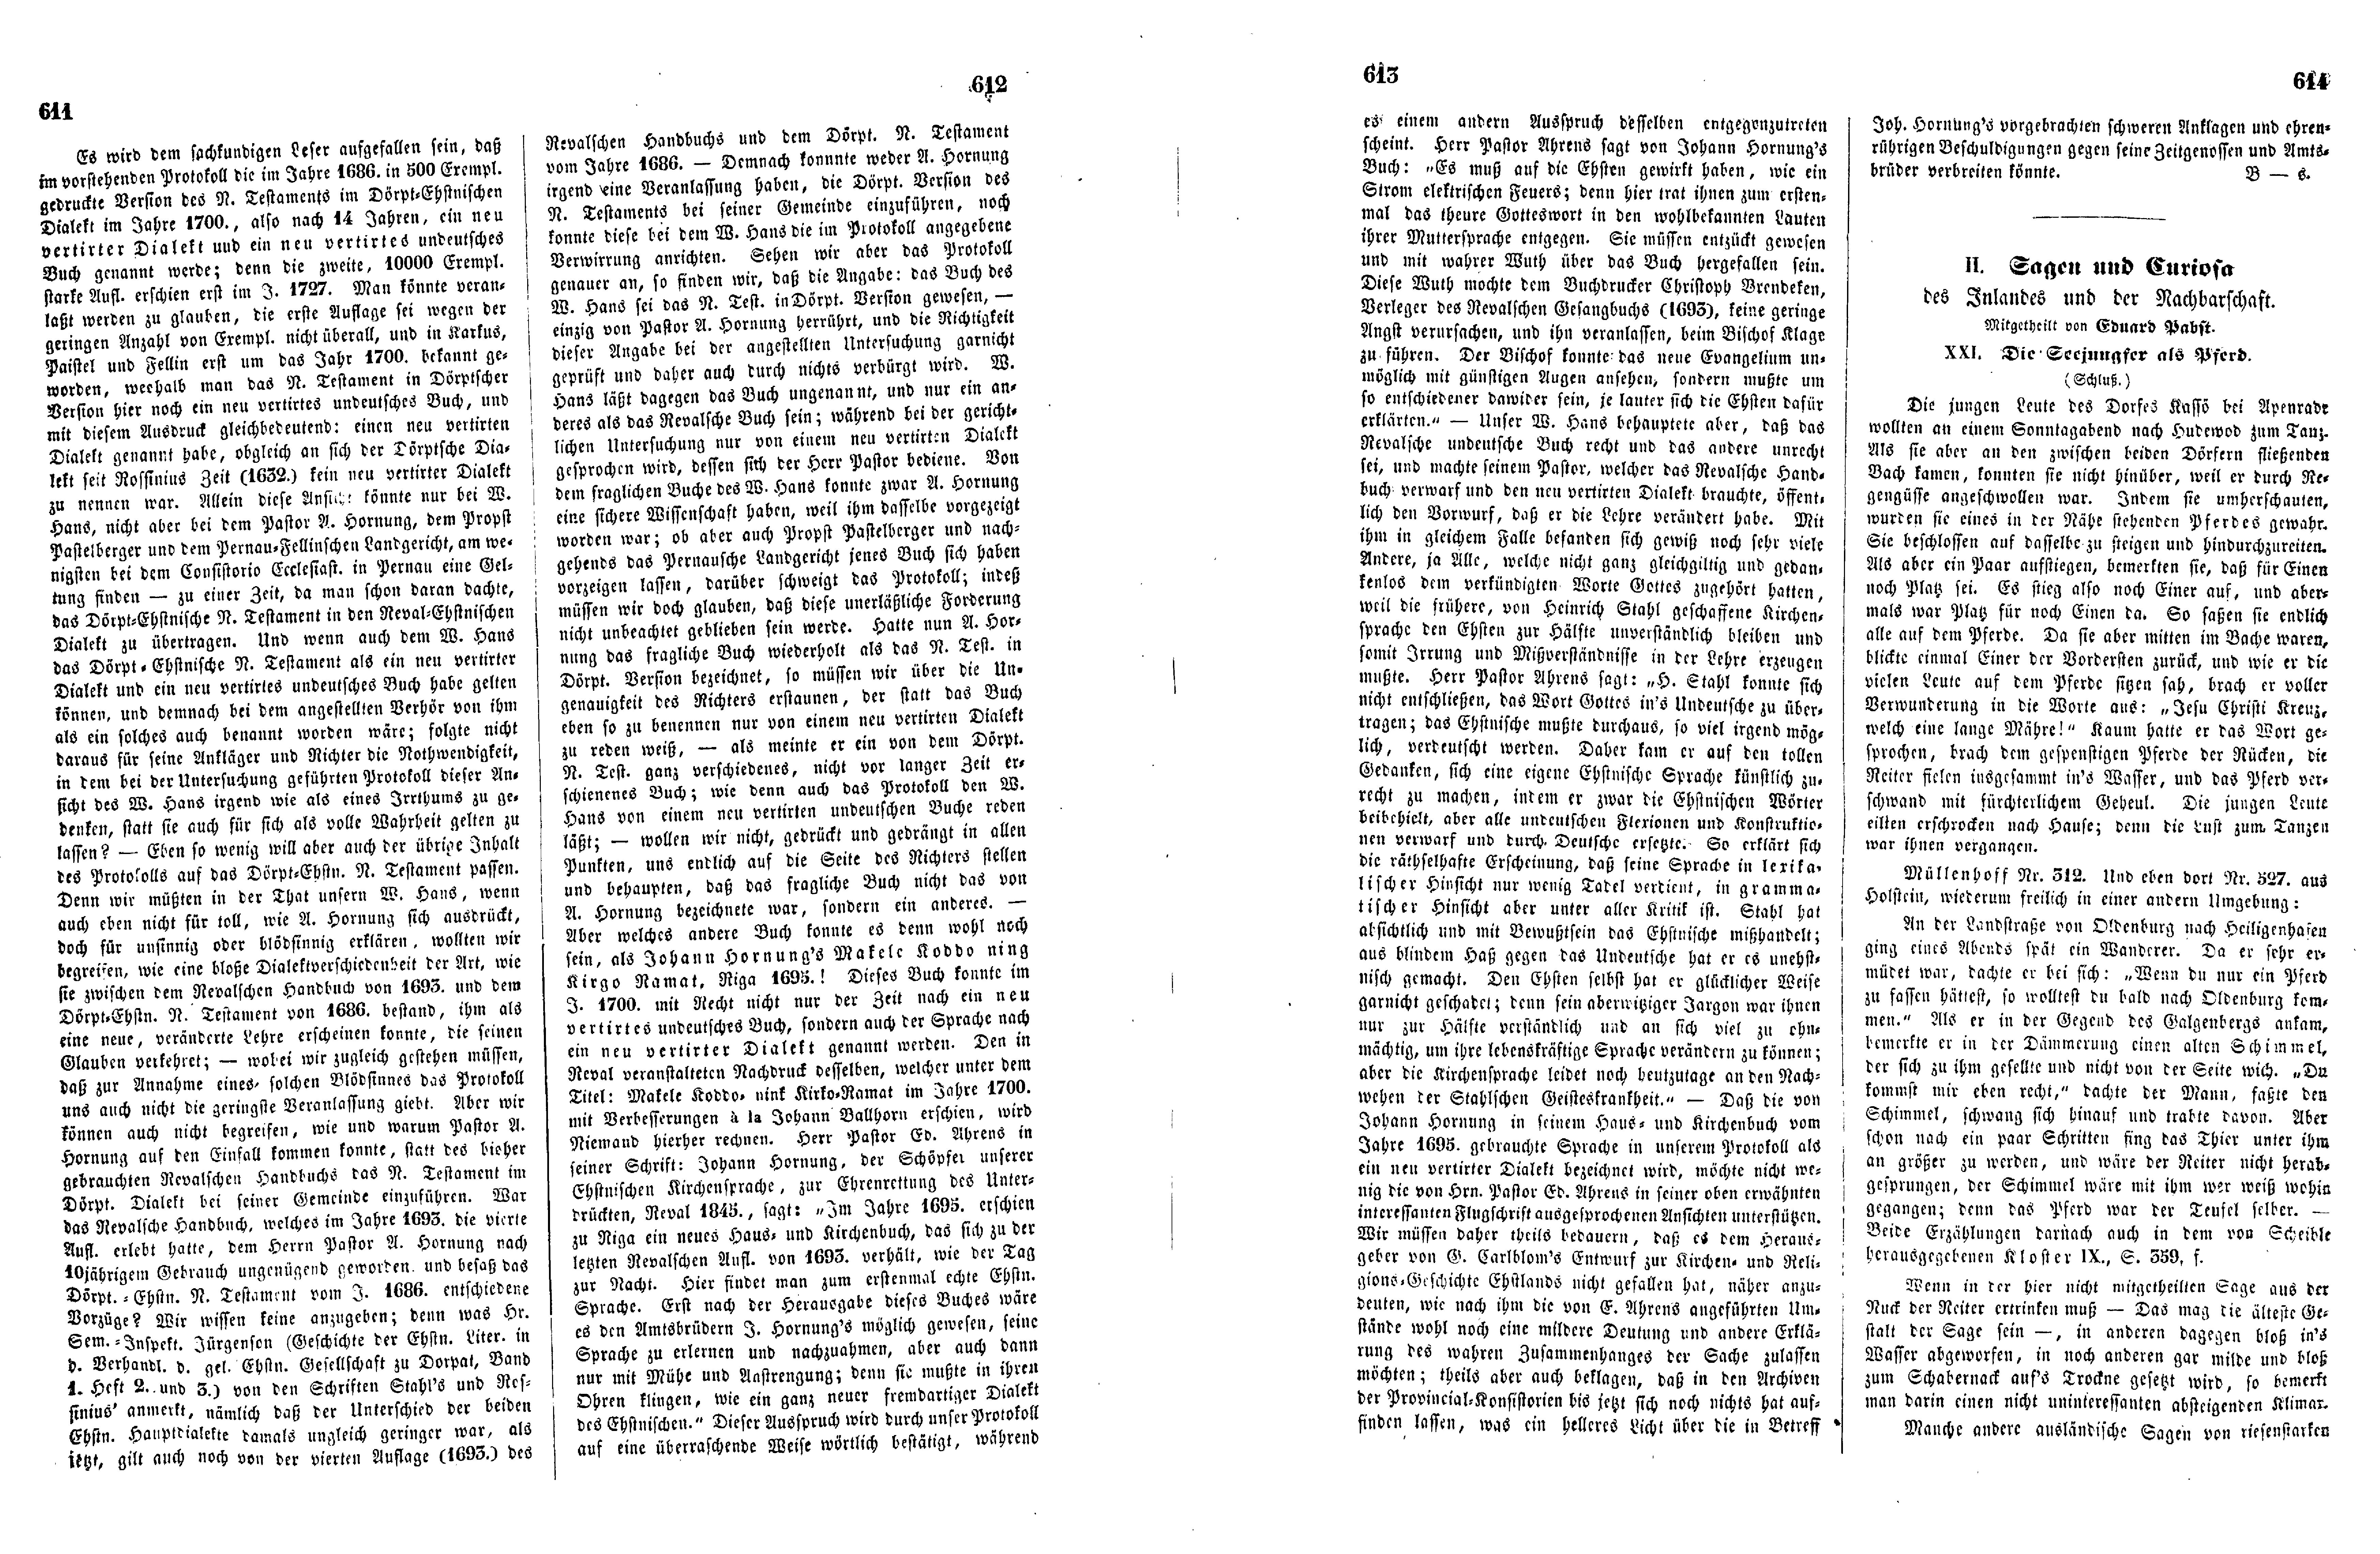 Das Inland [17] (1852) | 158. (611-614) Main body of text